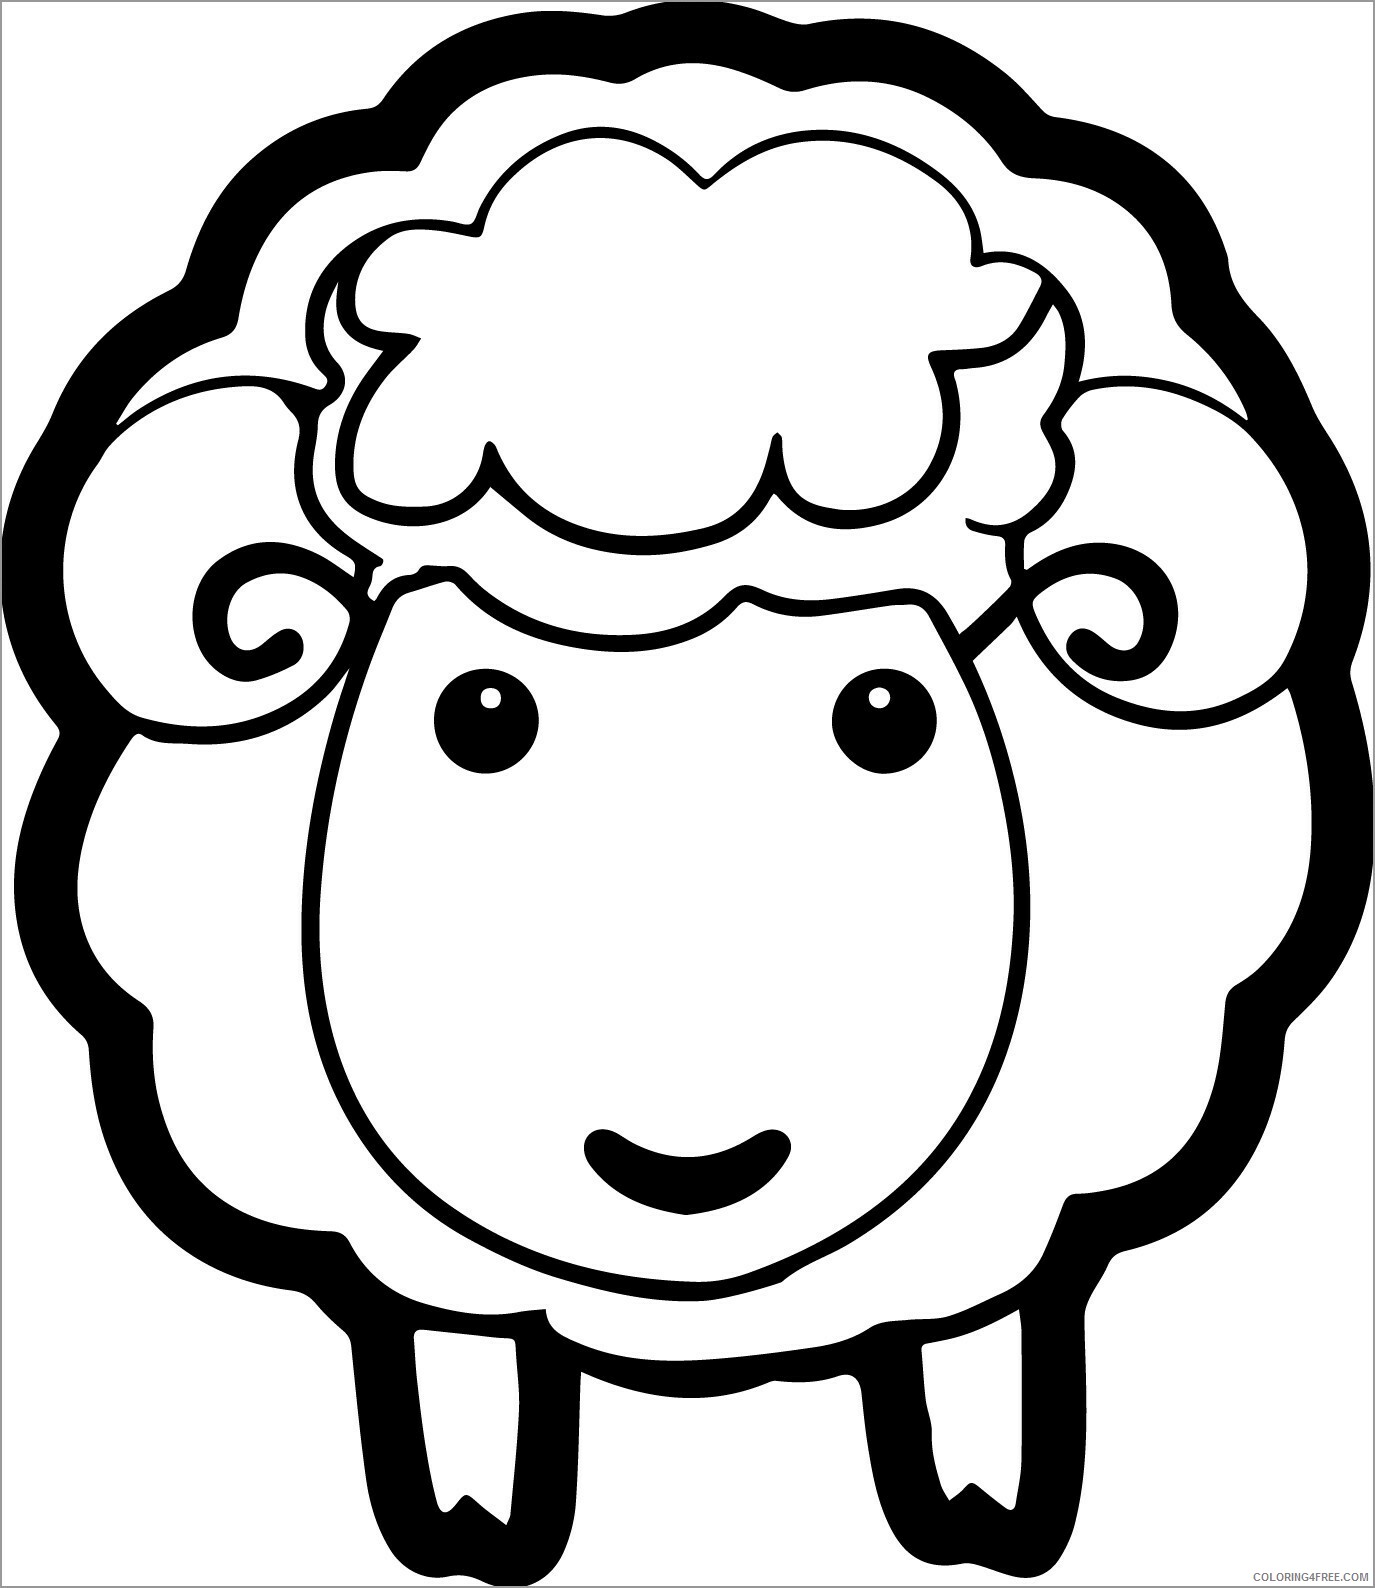 Preschool Animal Coloring Pages lamb for preschool Printable 2021 4861 Coloring4free